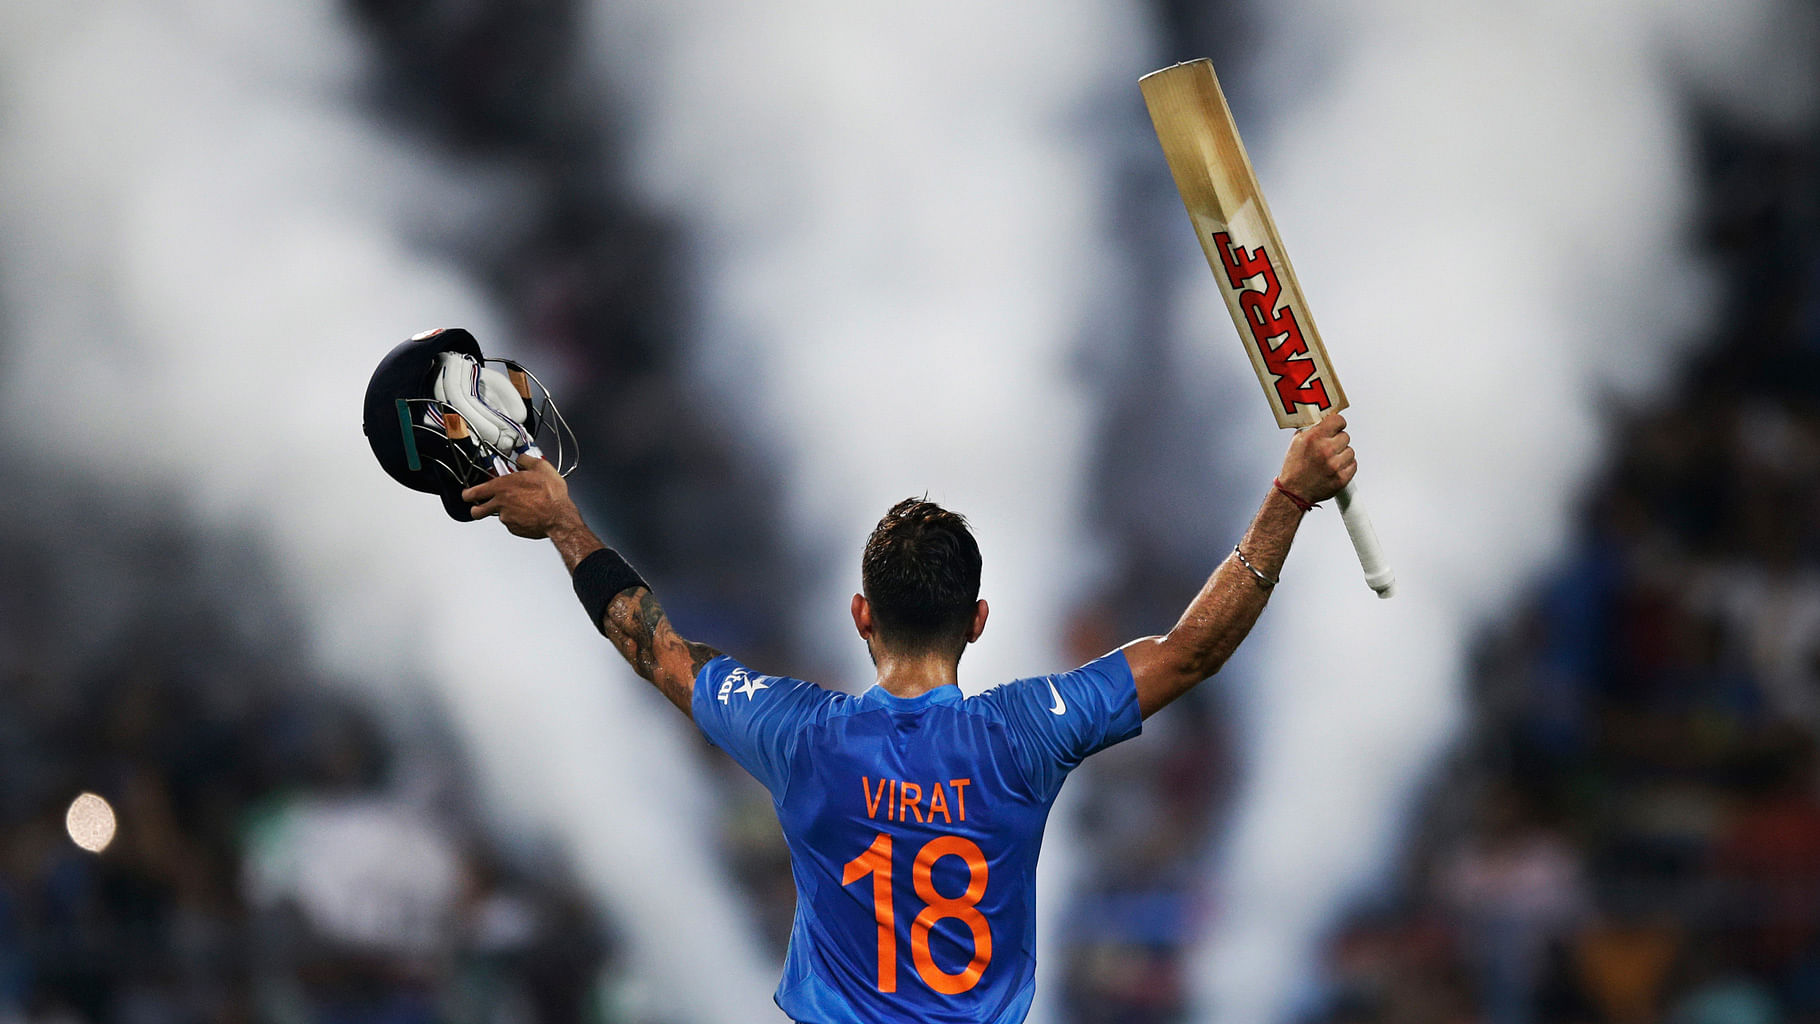 Virat Kohli is the best batsman in the T20 format, says Kumar Sangakkara. (Photo: AP)